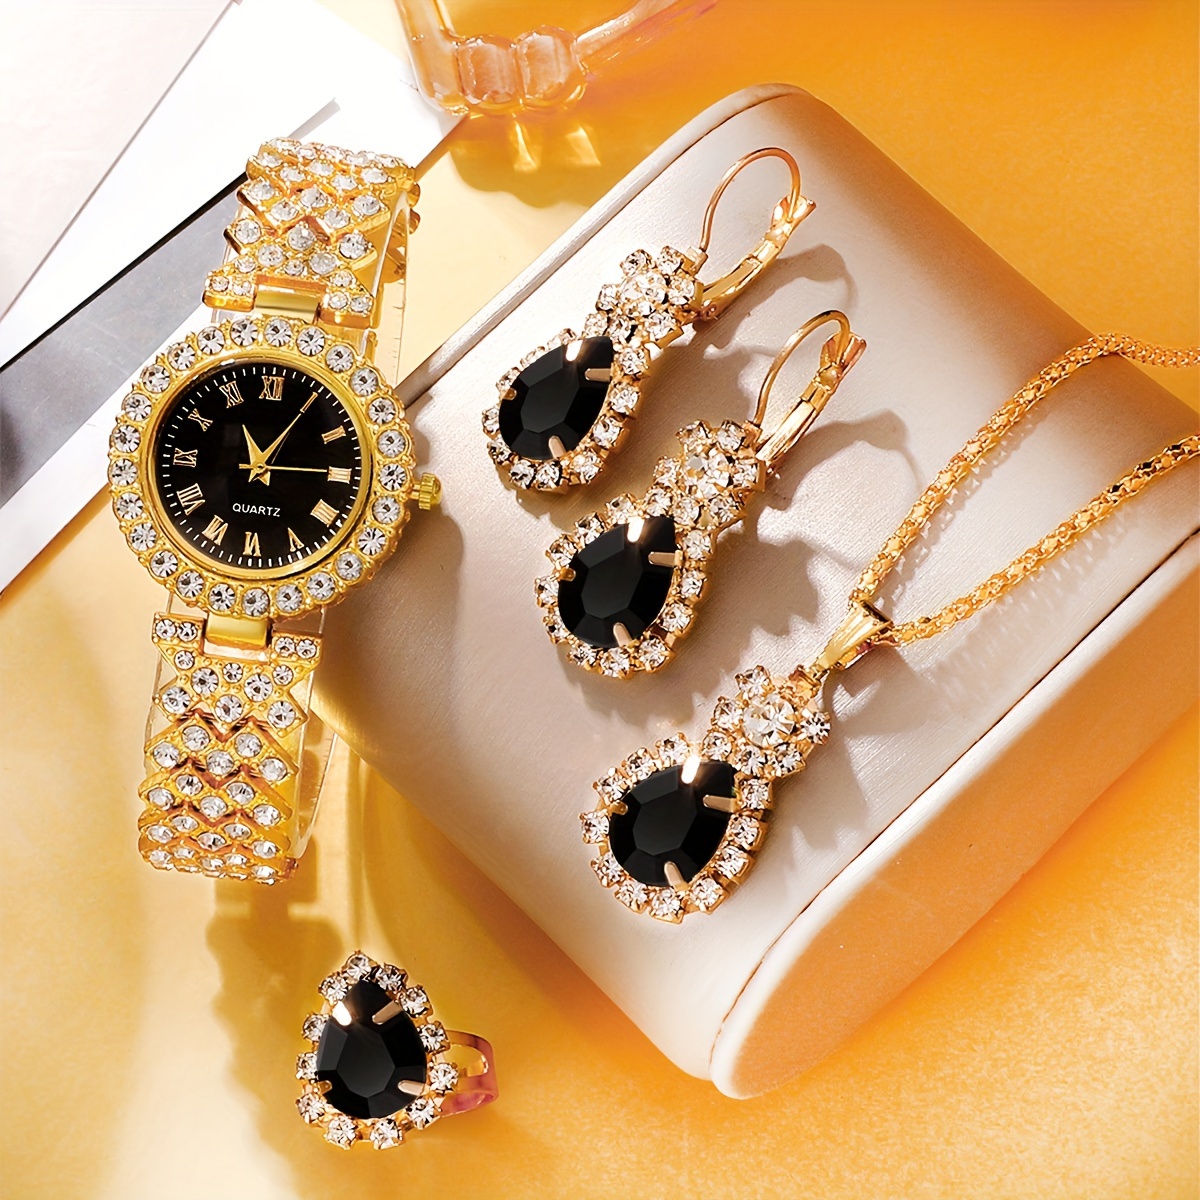 

5pcs/set Women's Watch Vintage Rhinestone Quartz Watch Rome Fashion Analog Wrist Watch & Jewelry Set, Gift For Mom Her